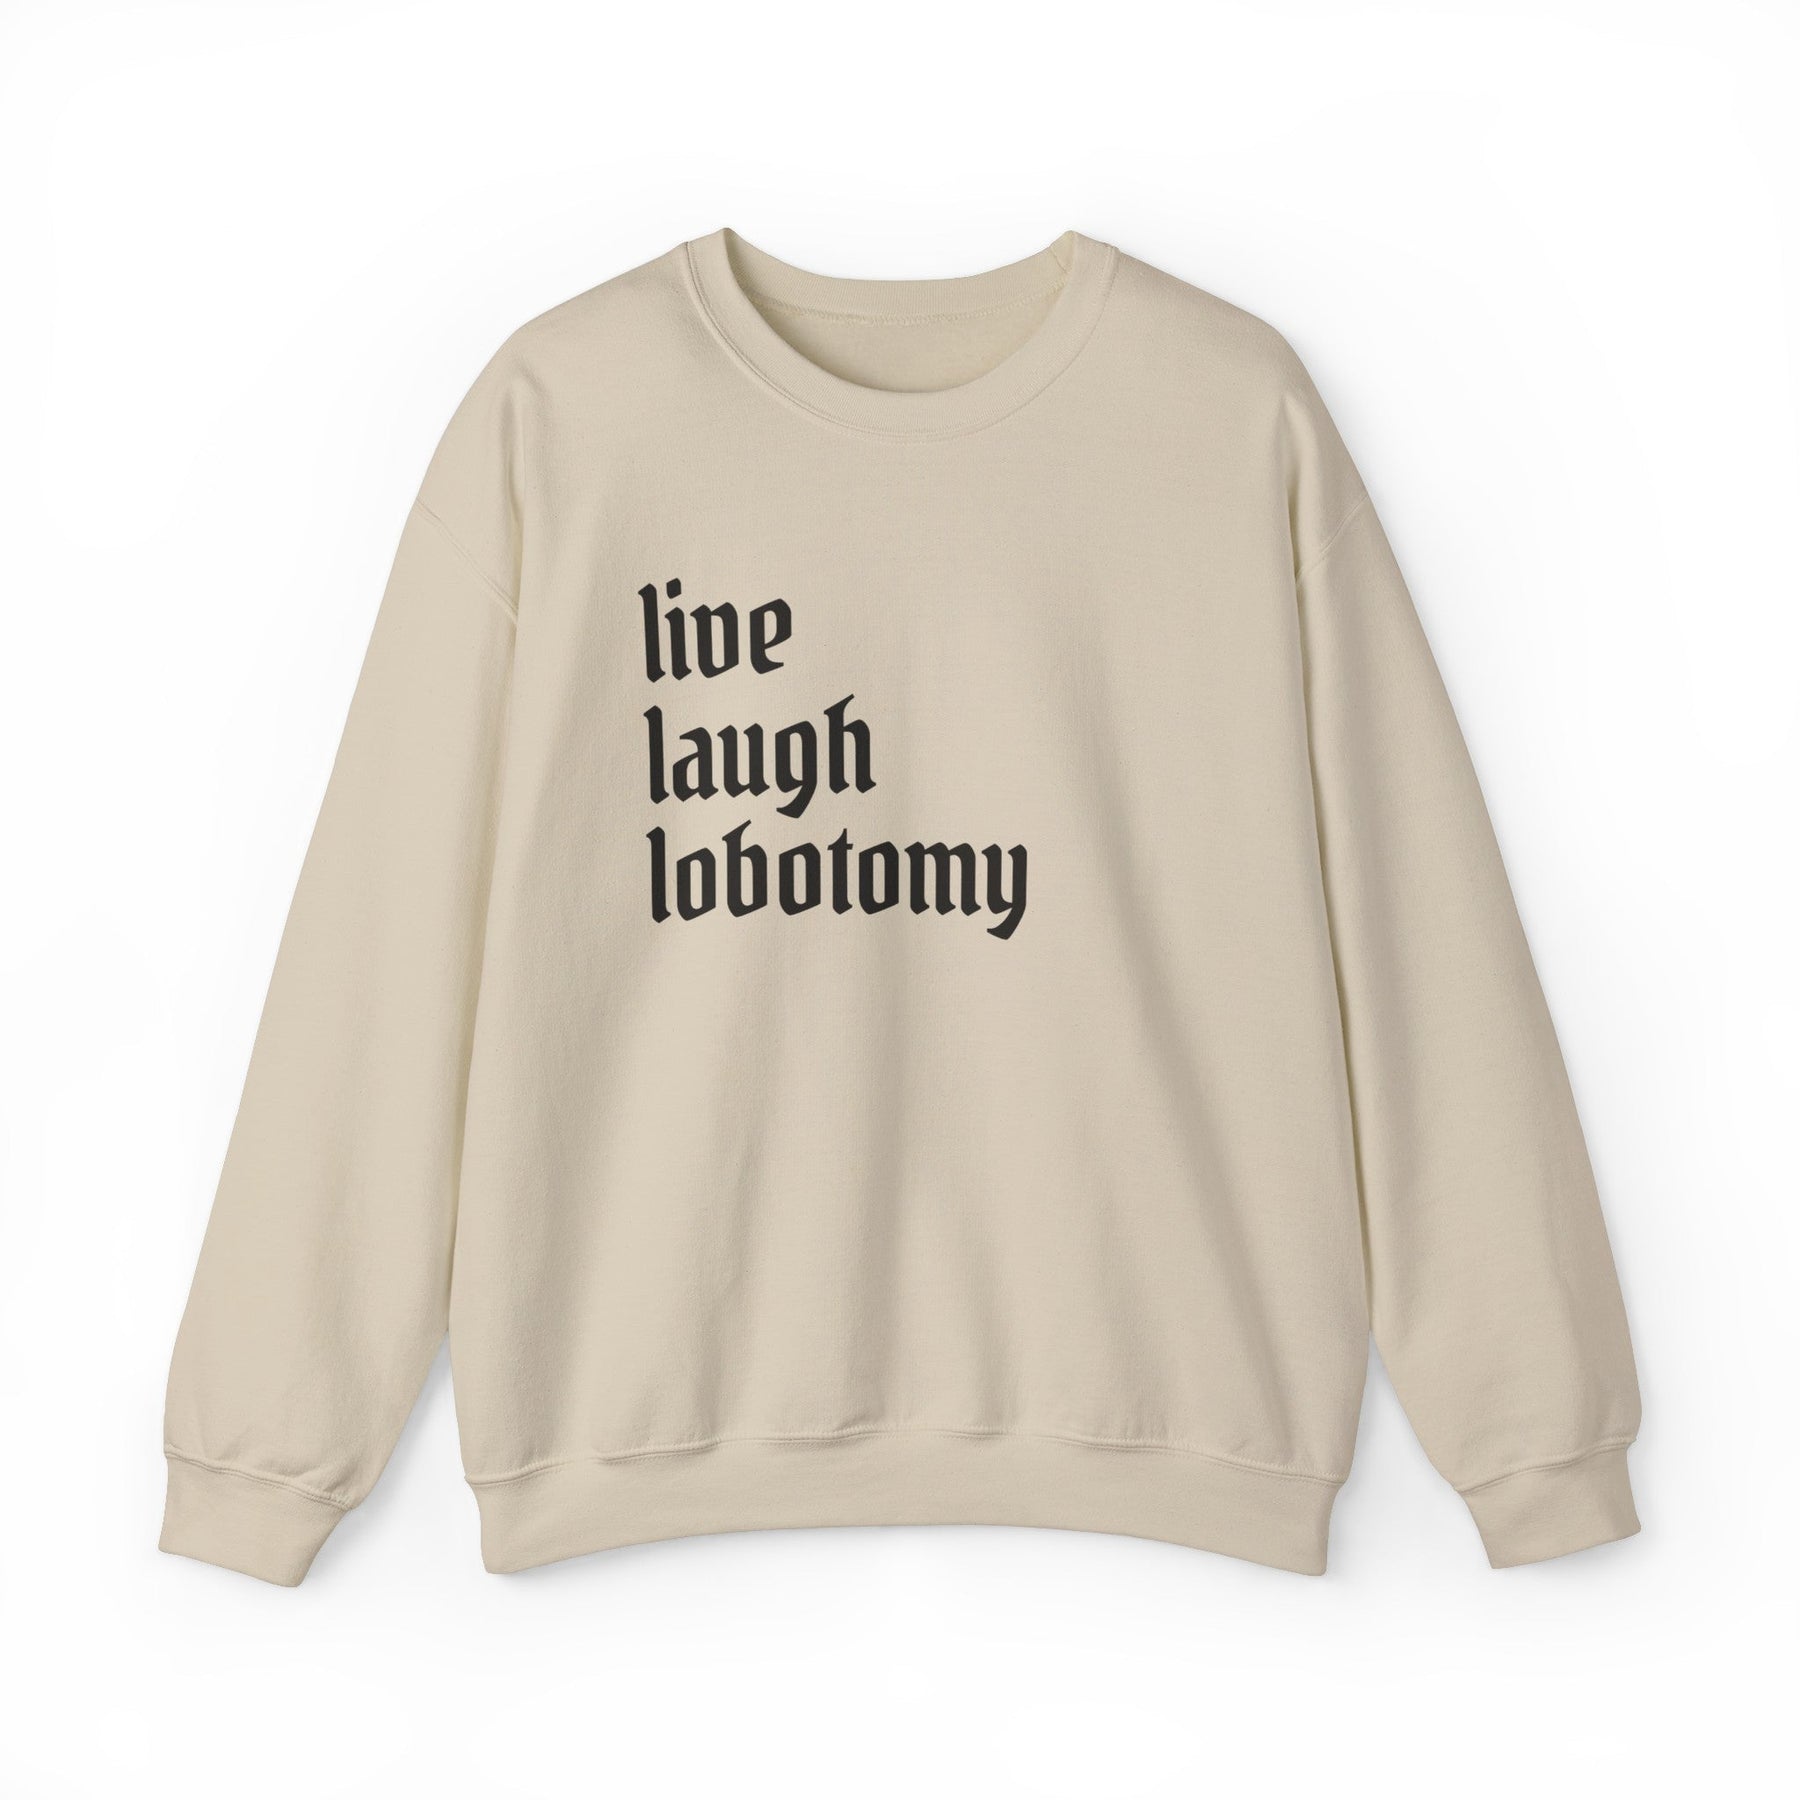 Live Laugh Lobotomy Feminine Goth Crew Neck Sweatshirt - Goth Cloth Co.Sweatshirt10901206197807448406